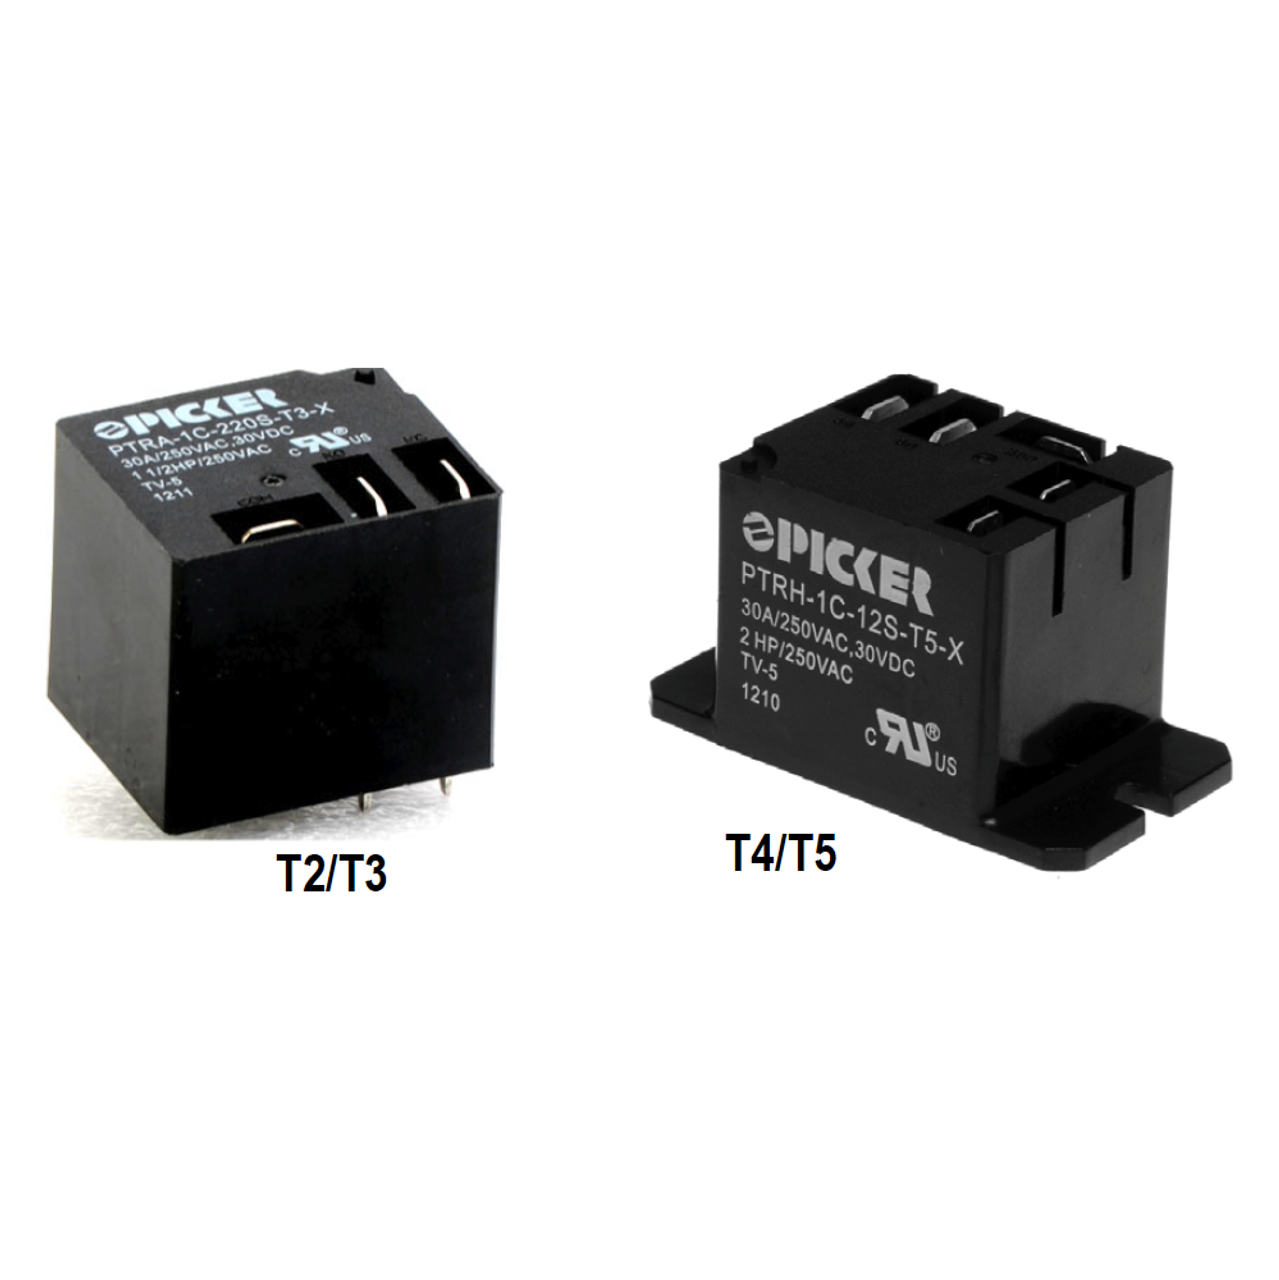 Picker PTRH-1C-48SF-T2-X670.6G Power Relays